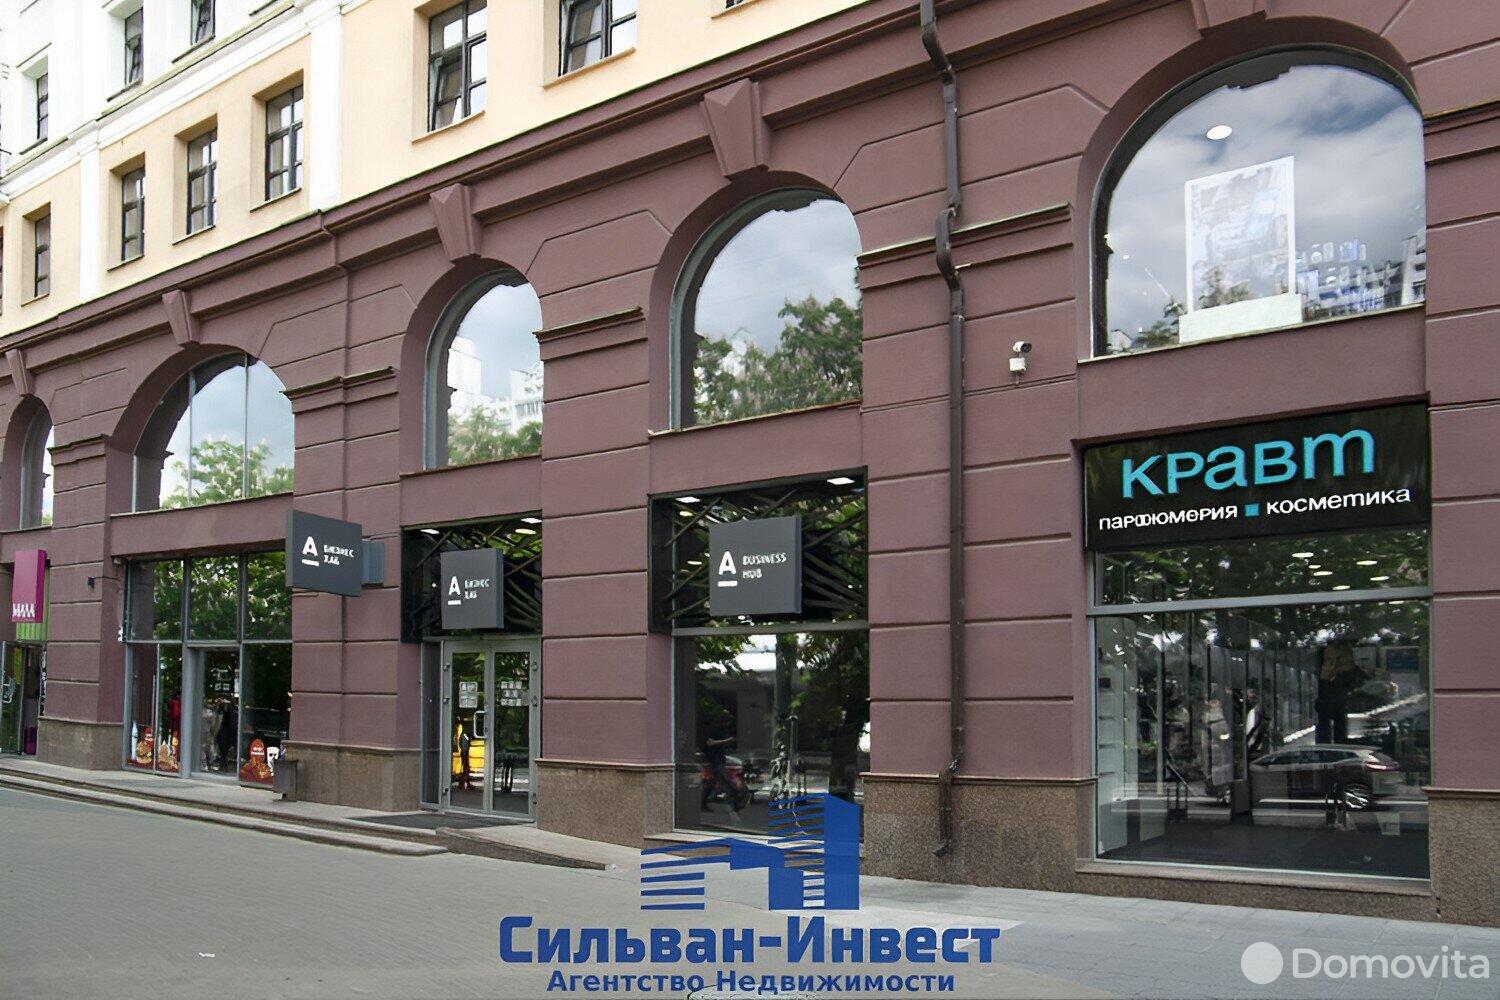 Аренда торговой точки на ул. Немига, д. 5 в Минске, 11325EUR, код 964282 - фото 3